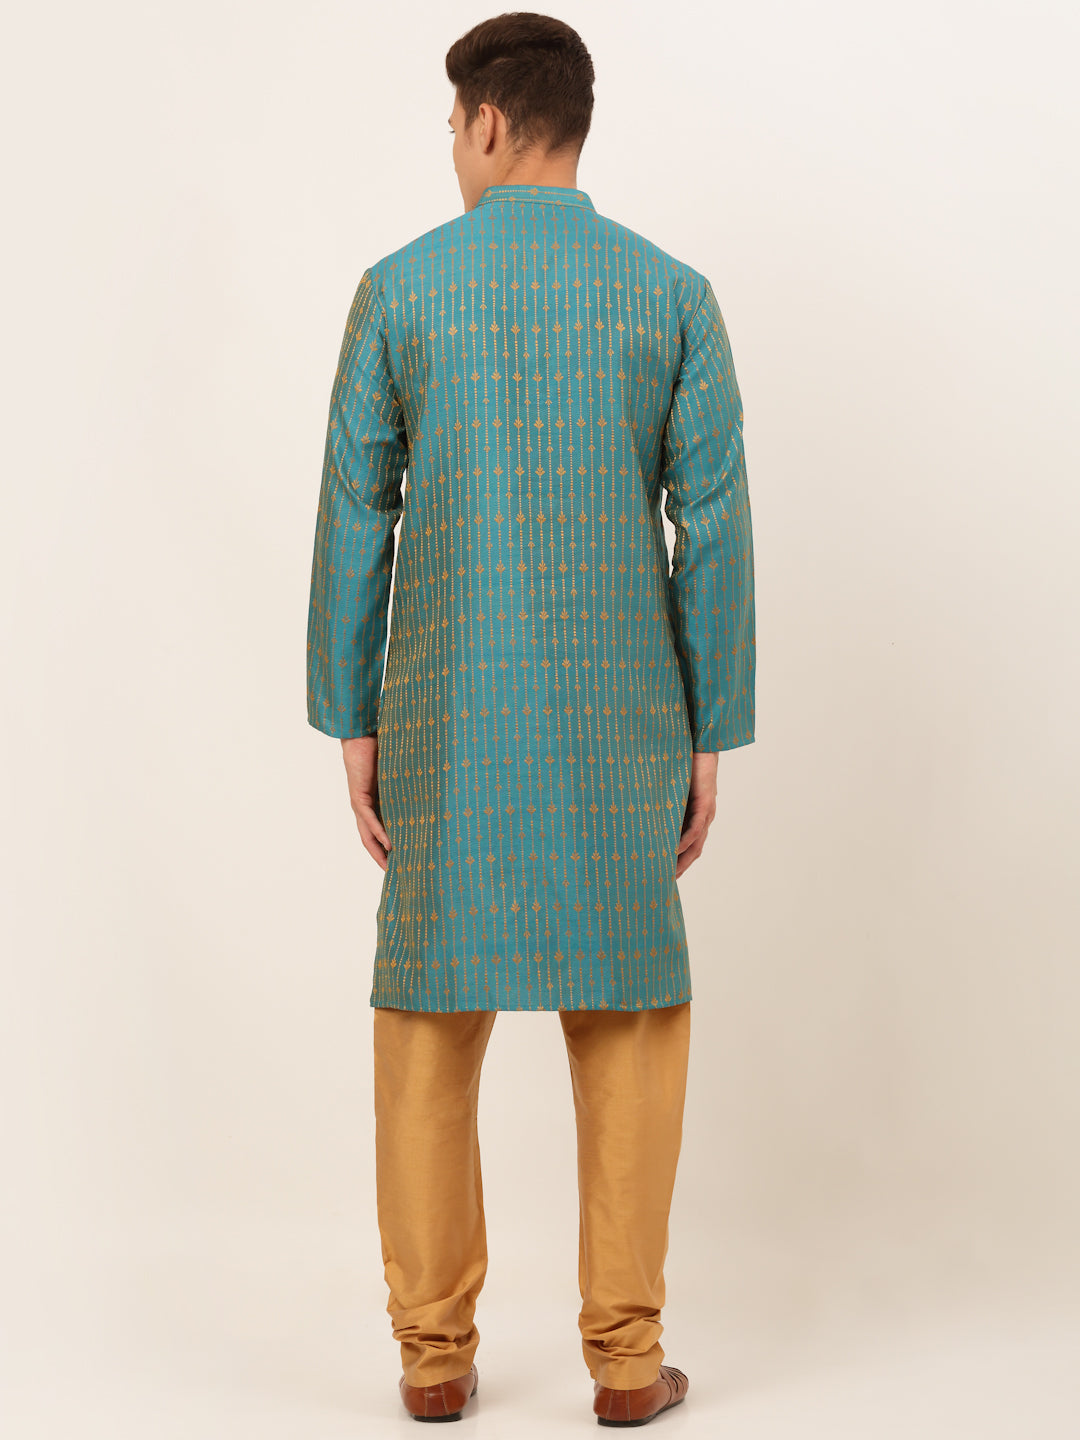 Men's Blue Embroidered Kurta Pyjama Sets ( Jokp 676 Blue ) - Virat Fashions